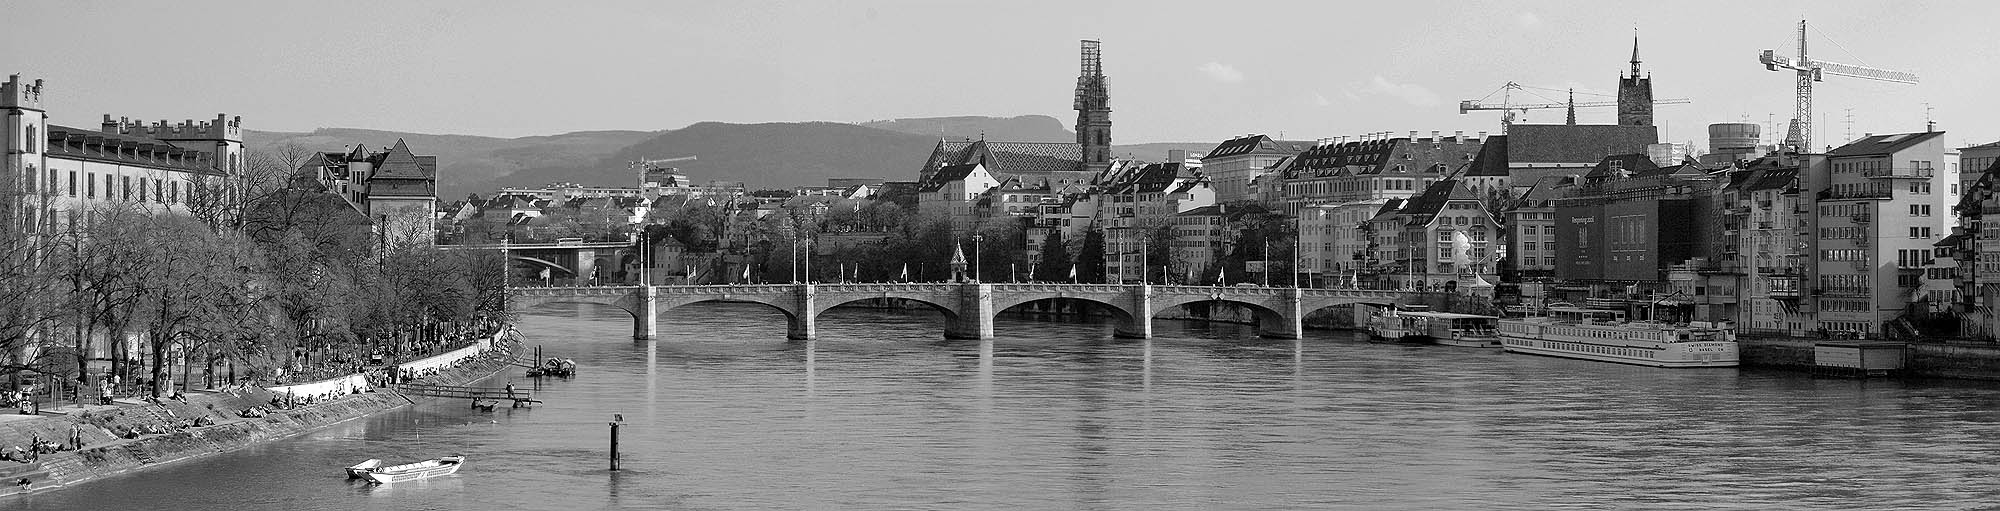 View from the Johanniter bridge